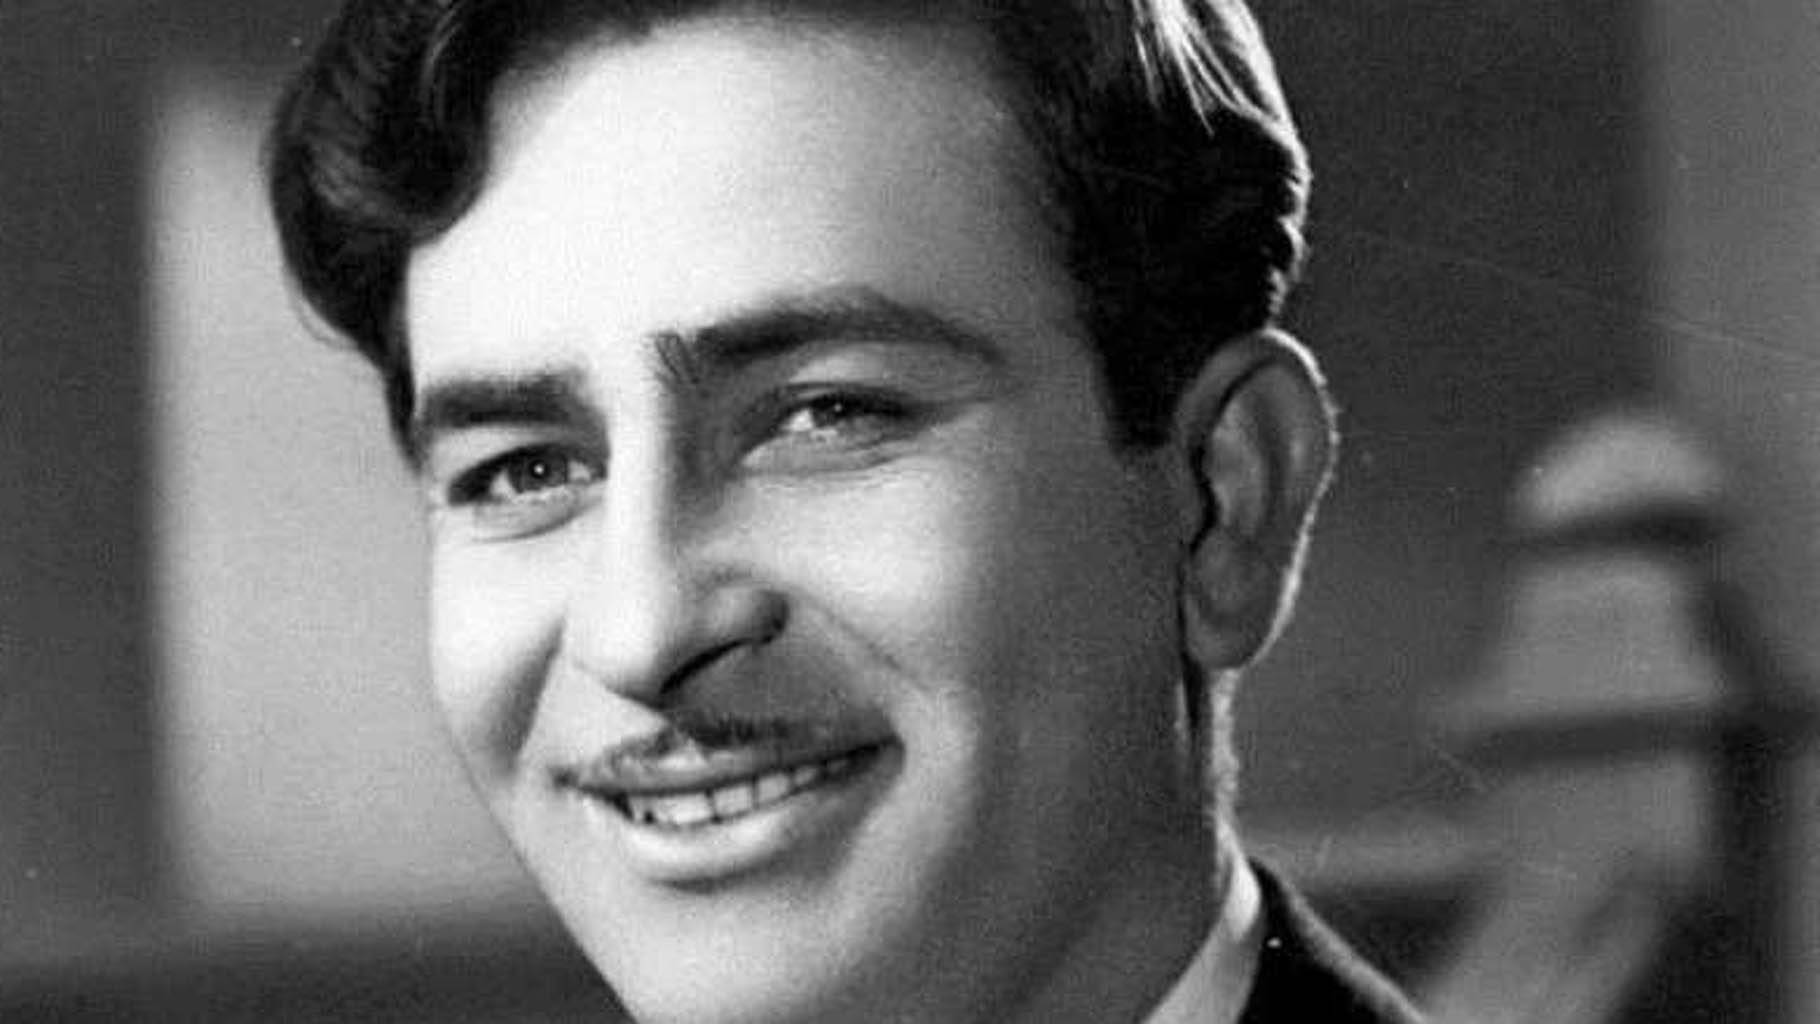 Â  Â Â In which year Raj Kapoor did win Dadasaheb Phalke Award?Â 